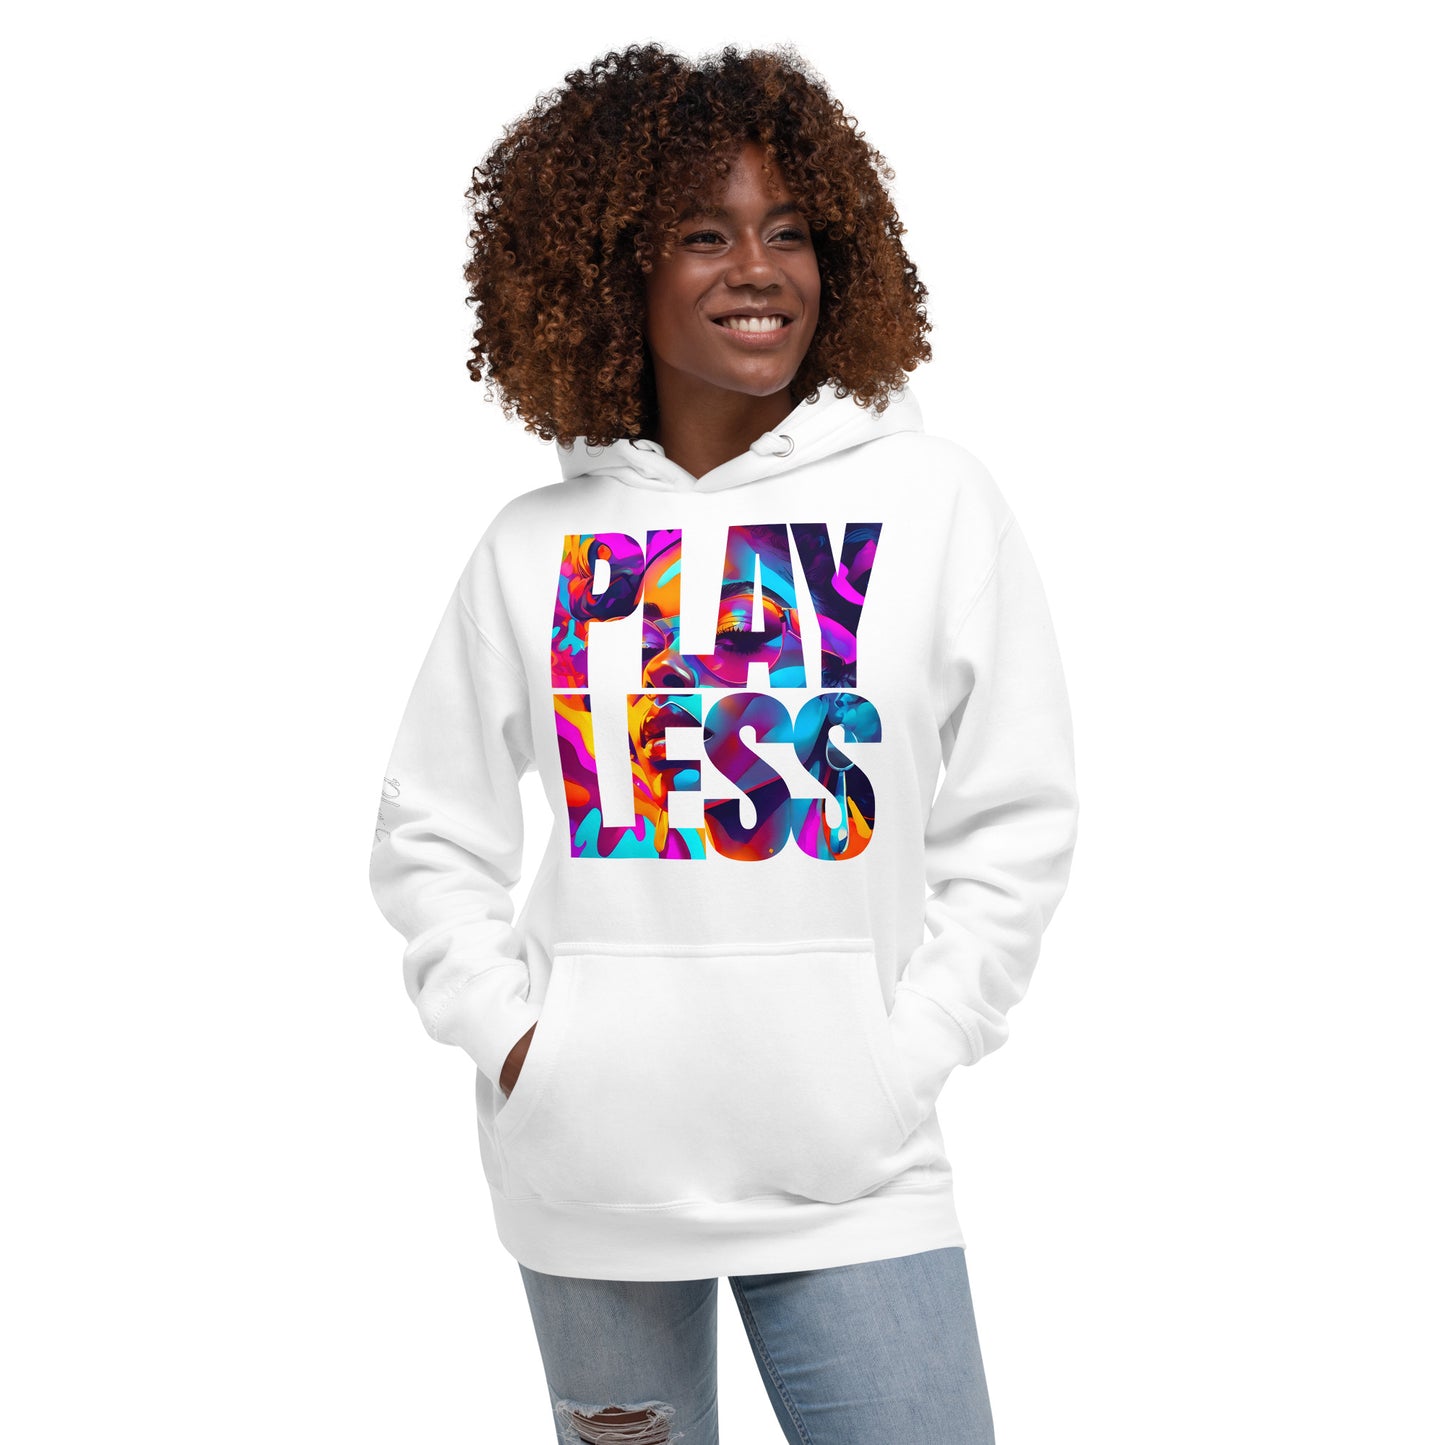 "Play Less" Neon Art Urban Wear Unisex Hoodie